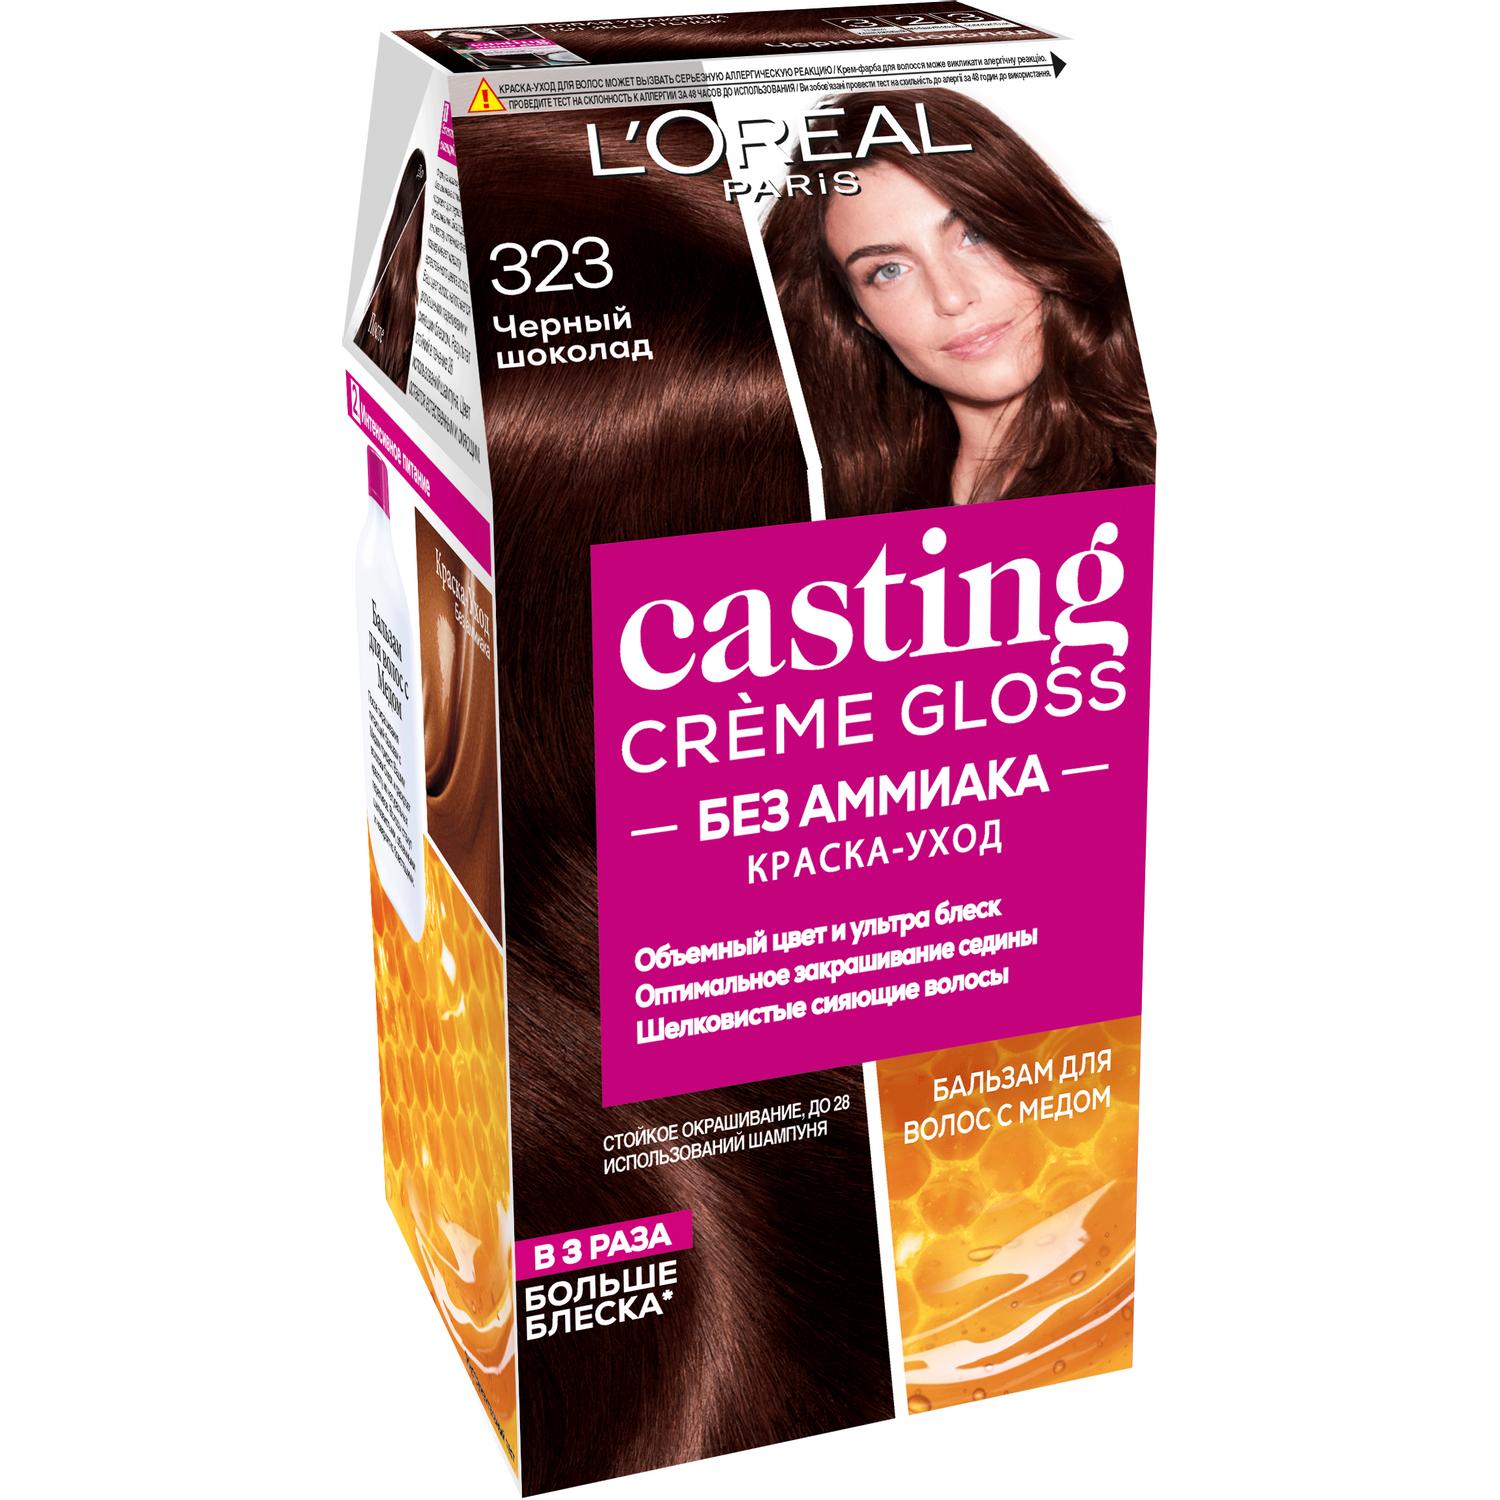 Краска L’Oreal Casting Creme Gloss 323 254 мл Черный шоколад (A3727302) краска для волос syoss coral gold 9 67 115 мл